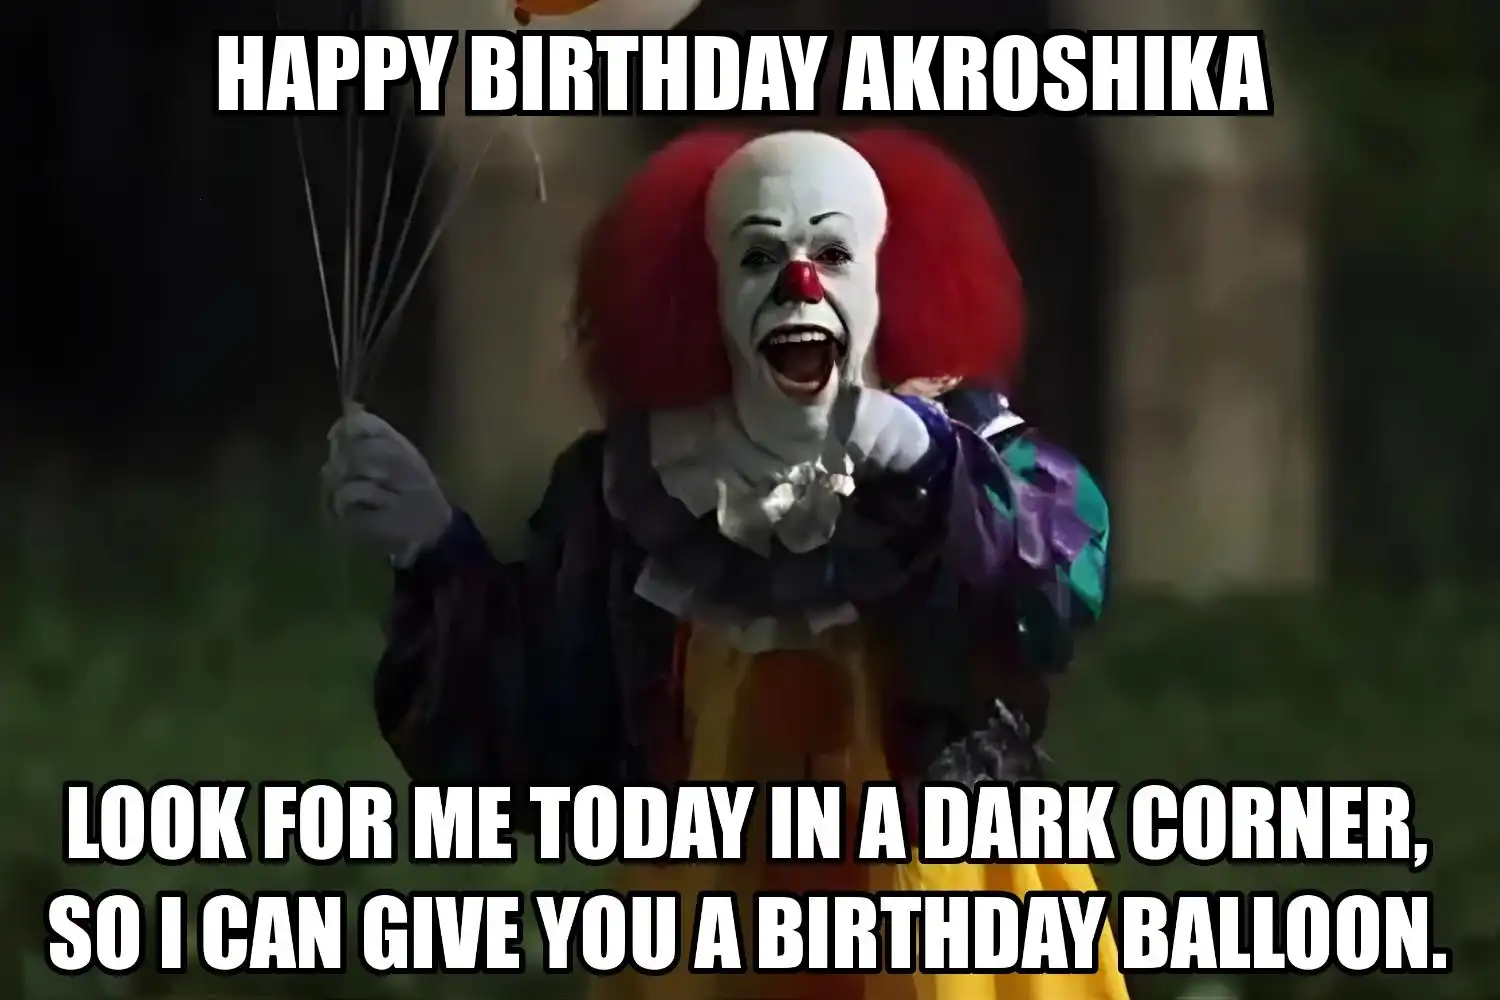 Happy Birthday Akroshika I Can Give You A Balloon Meme